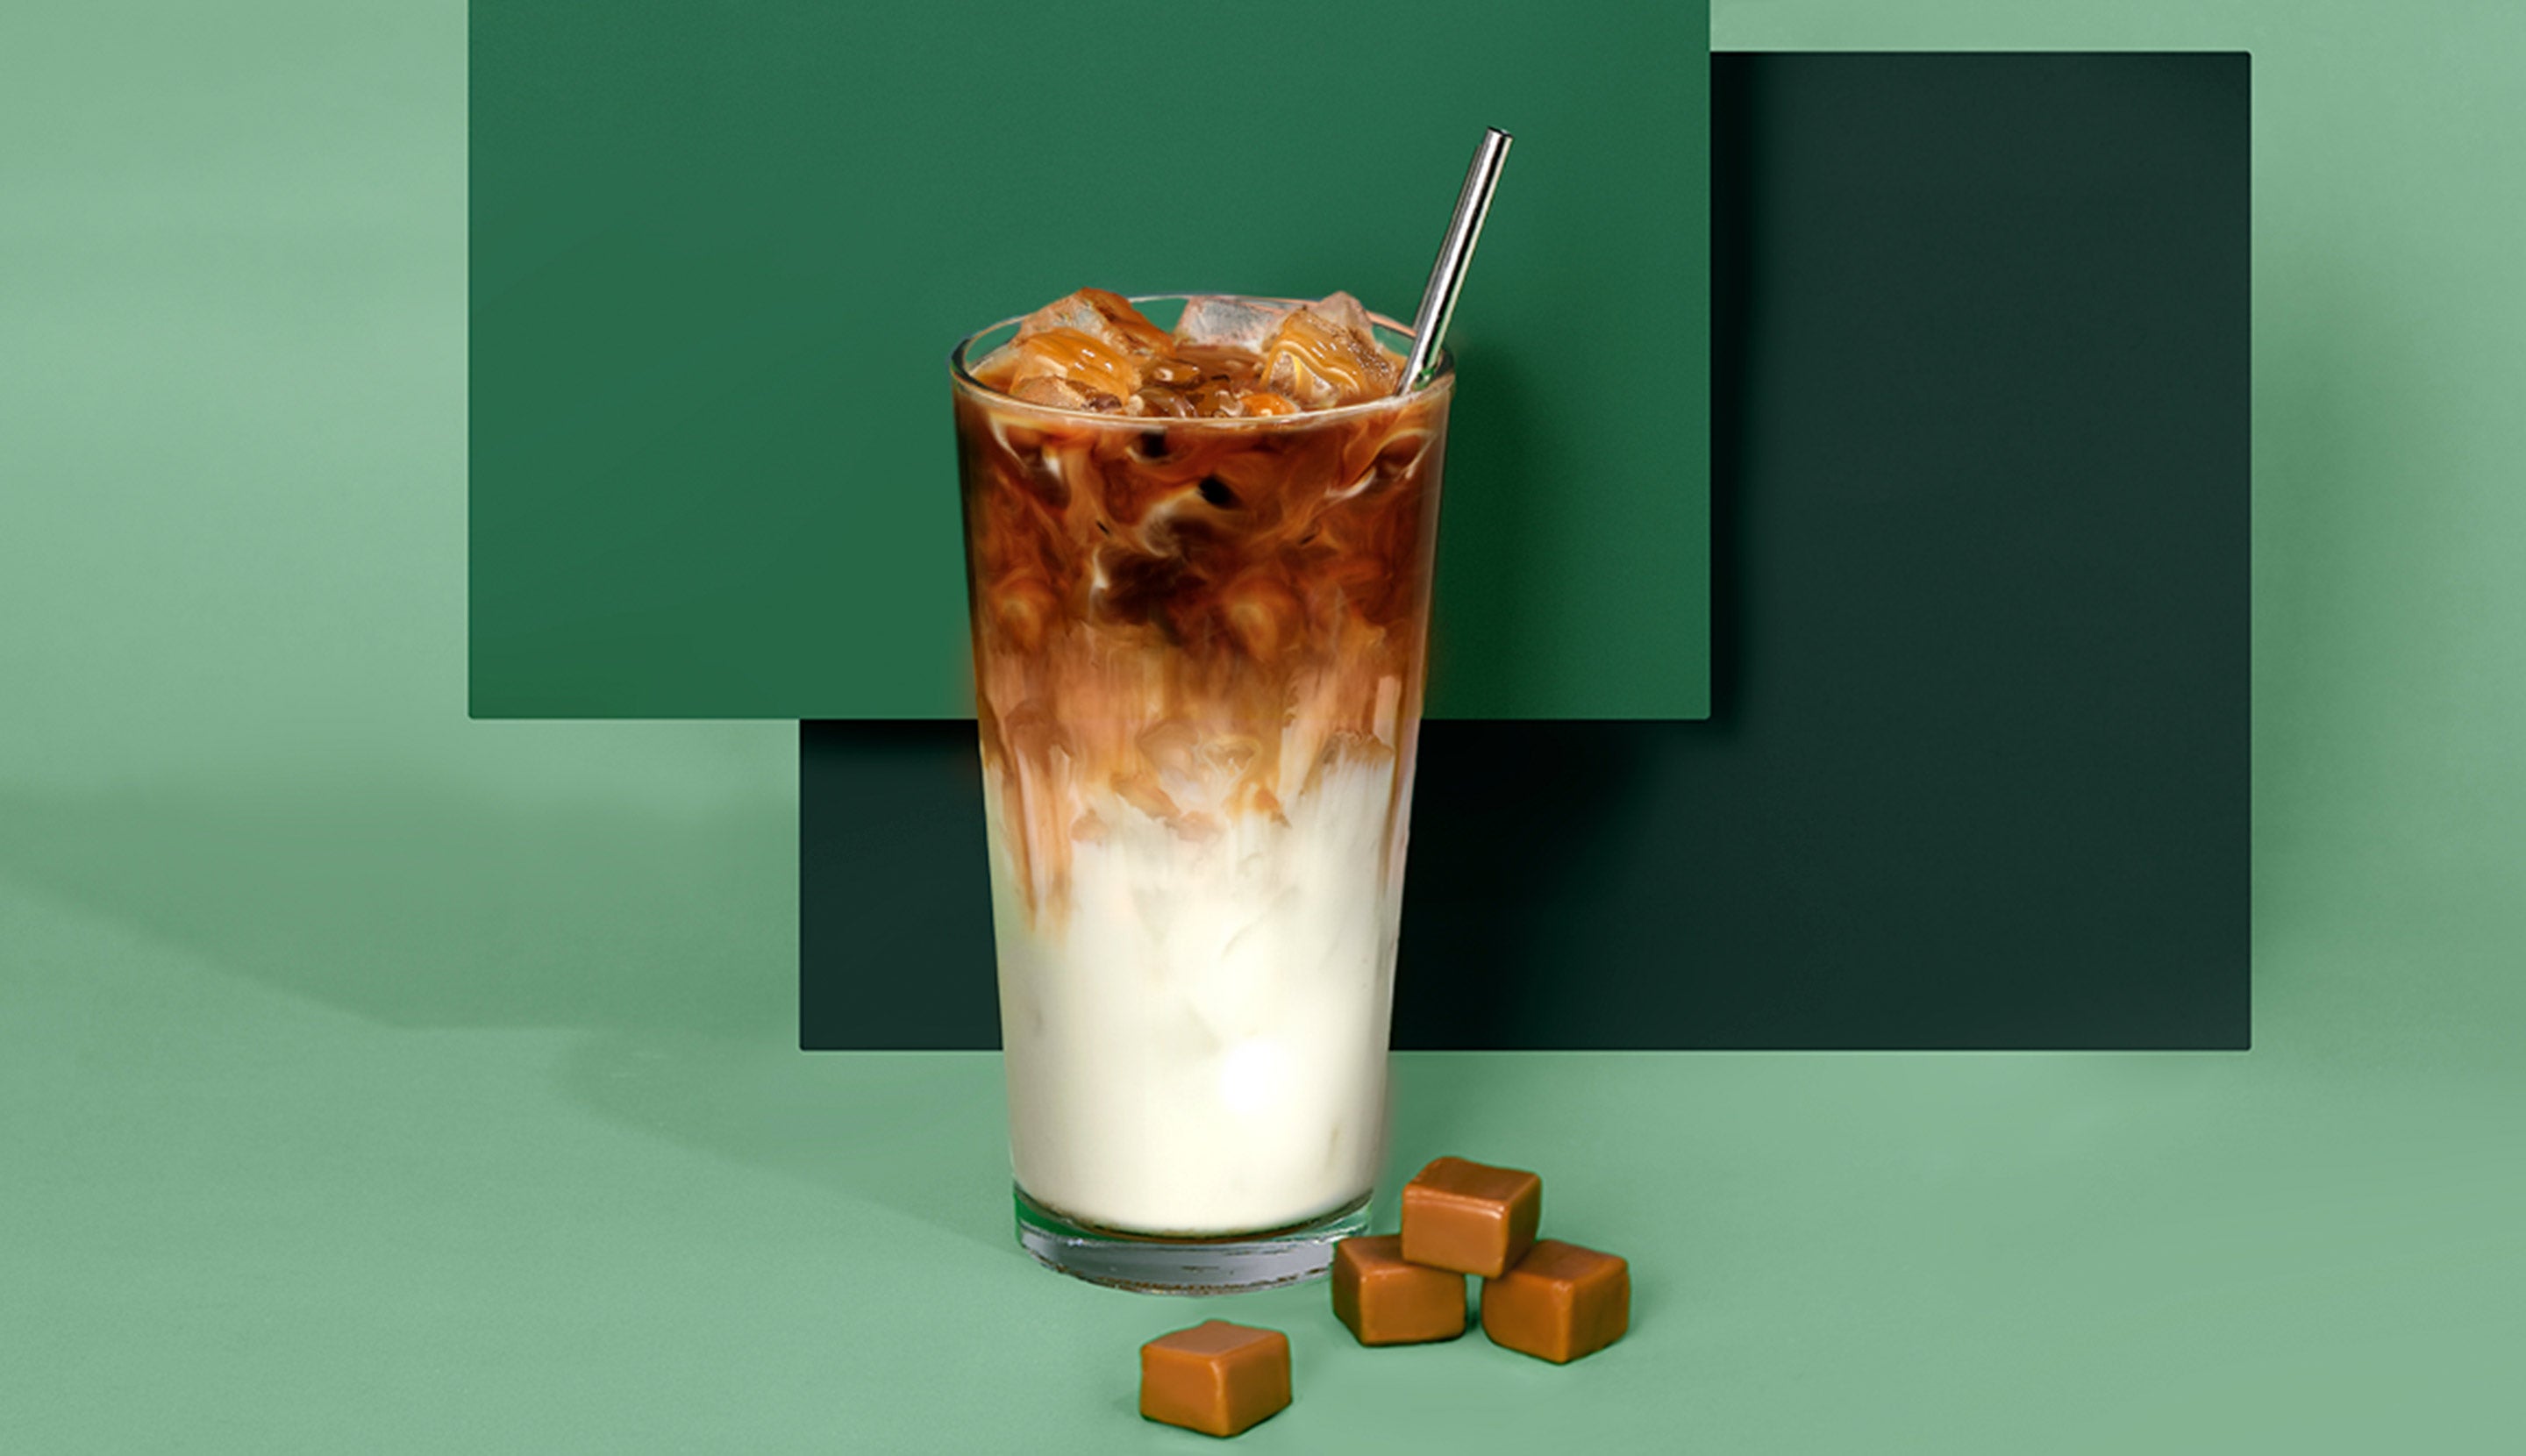 Iced caramel macchiato recipe - Starbucks copycat version